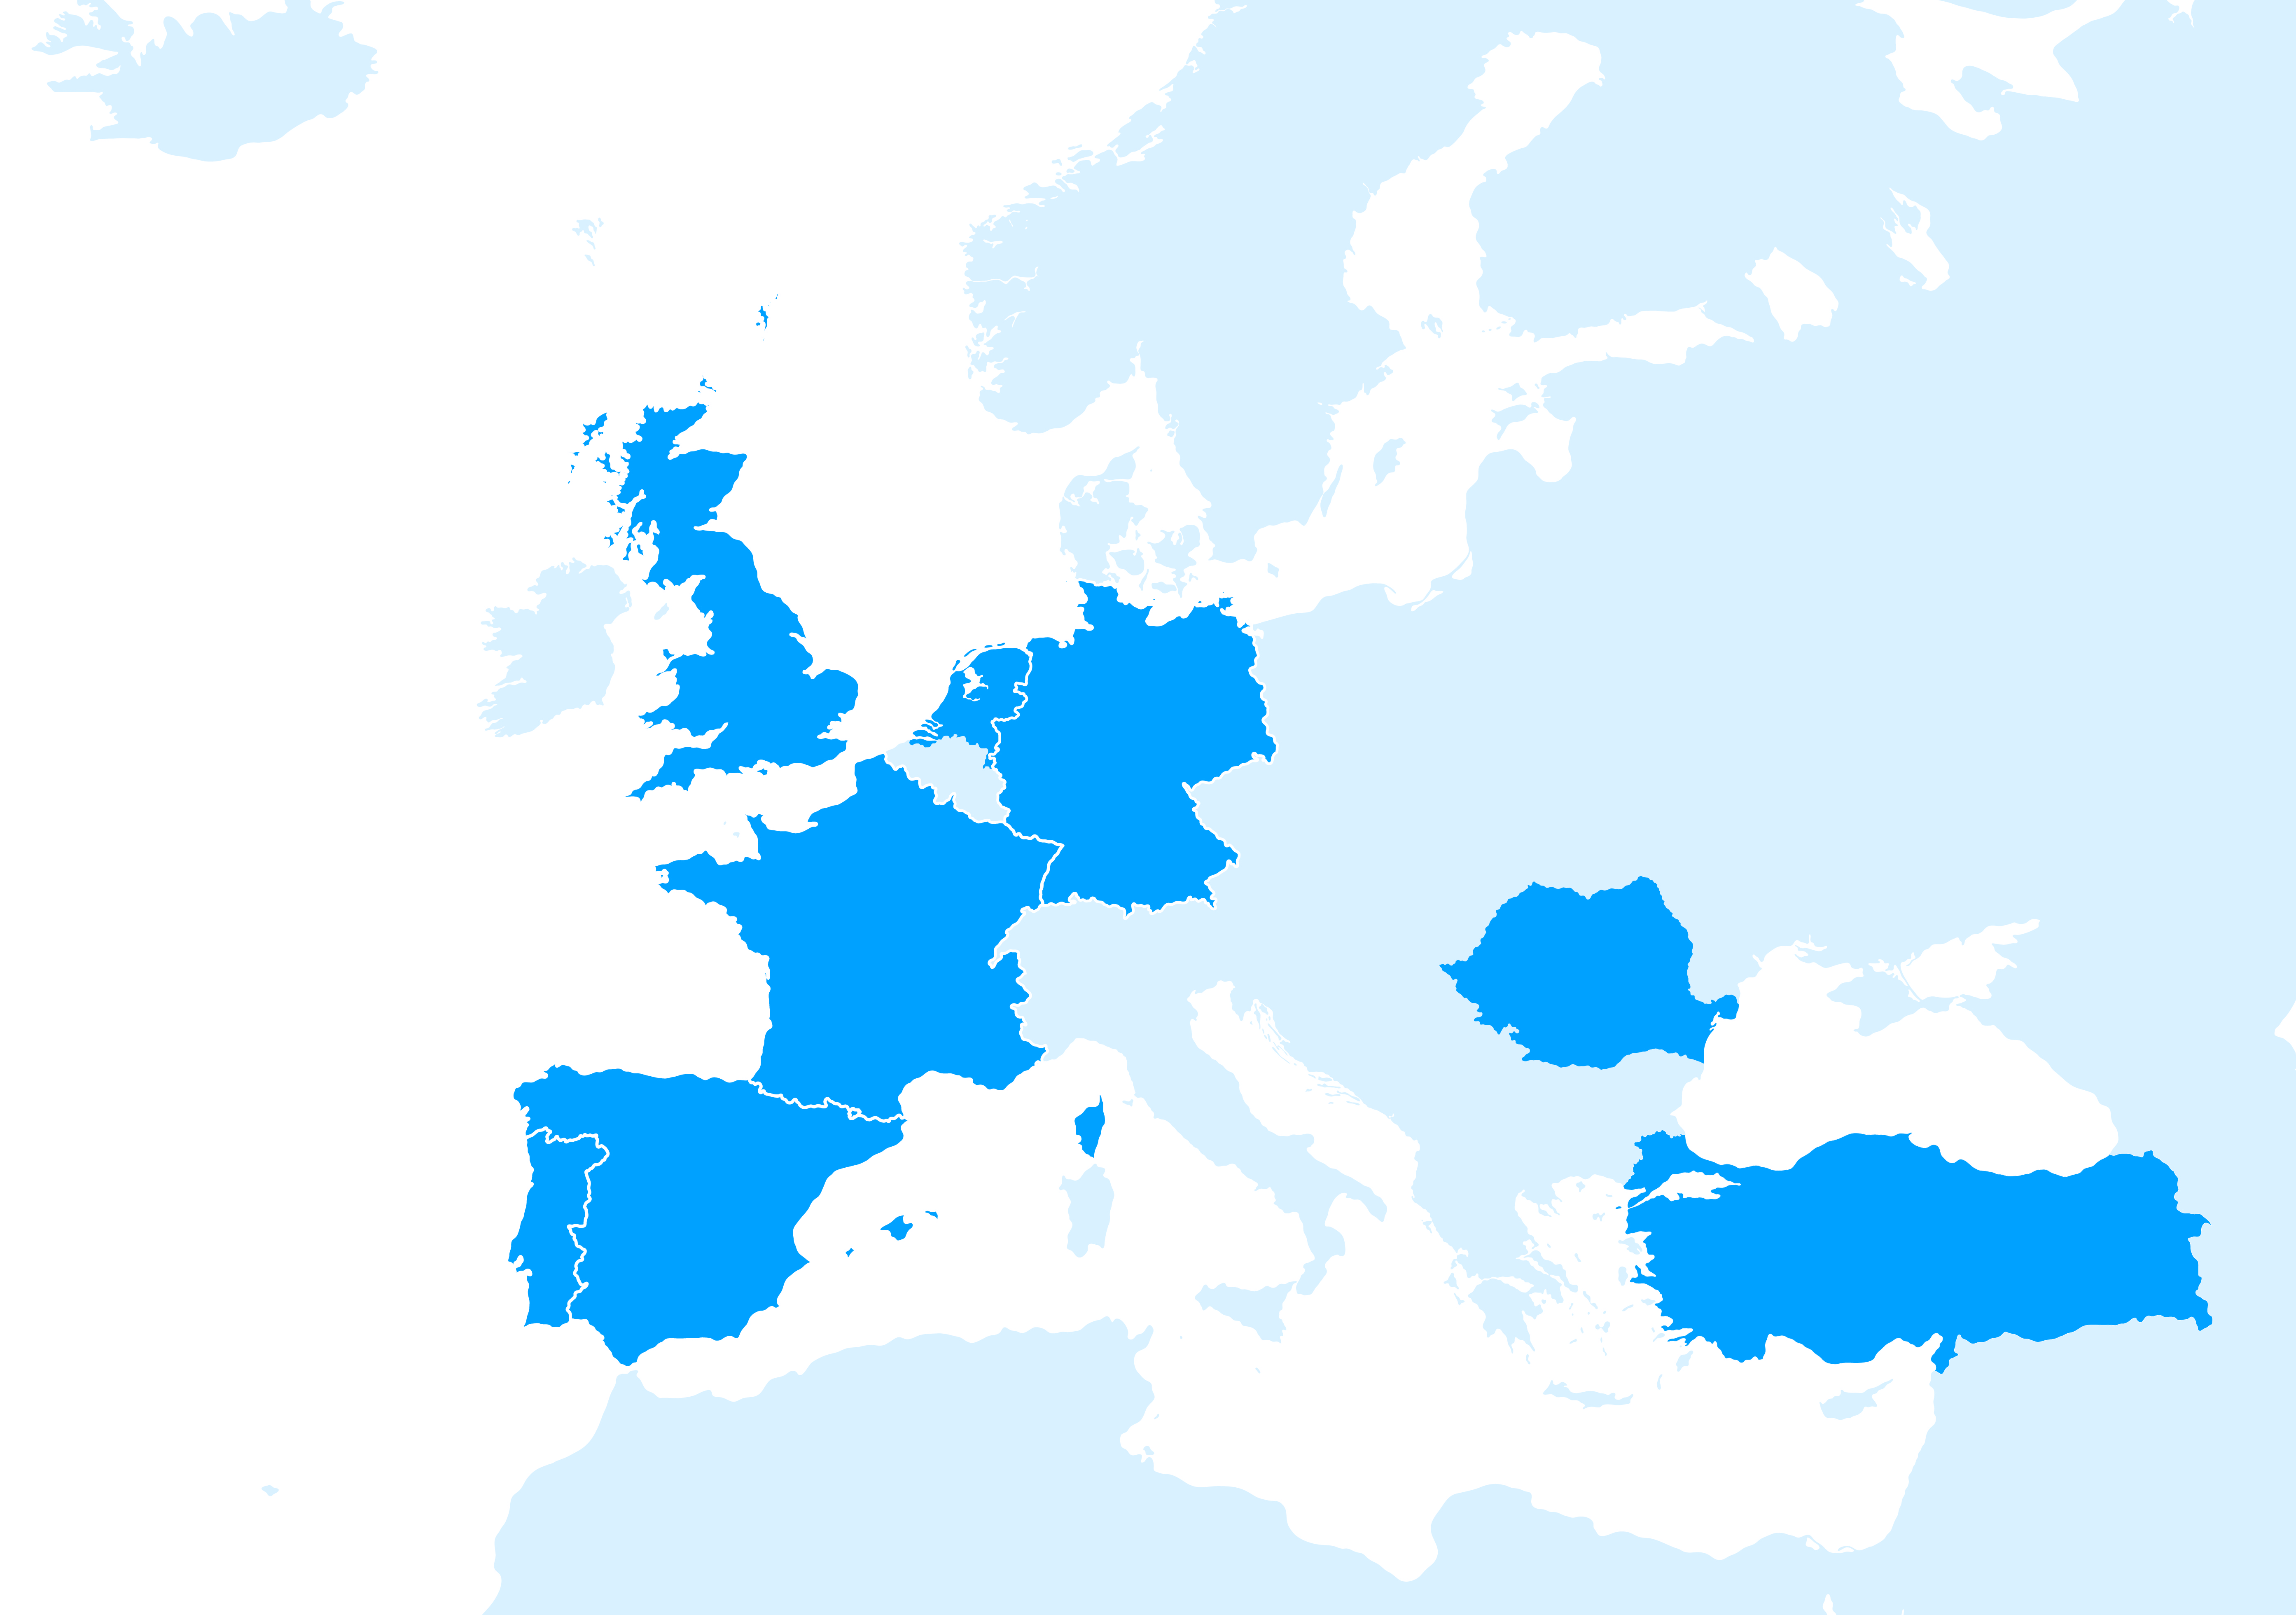 European presence